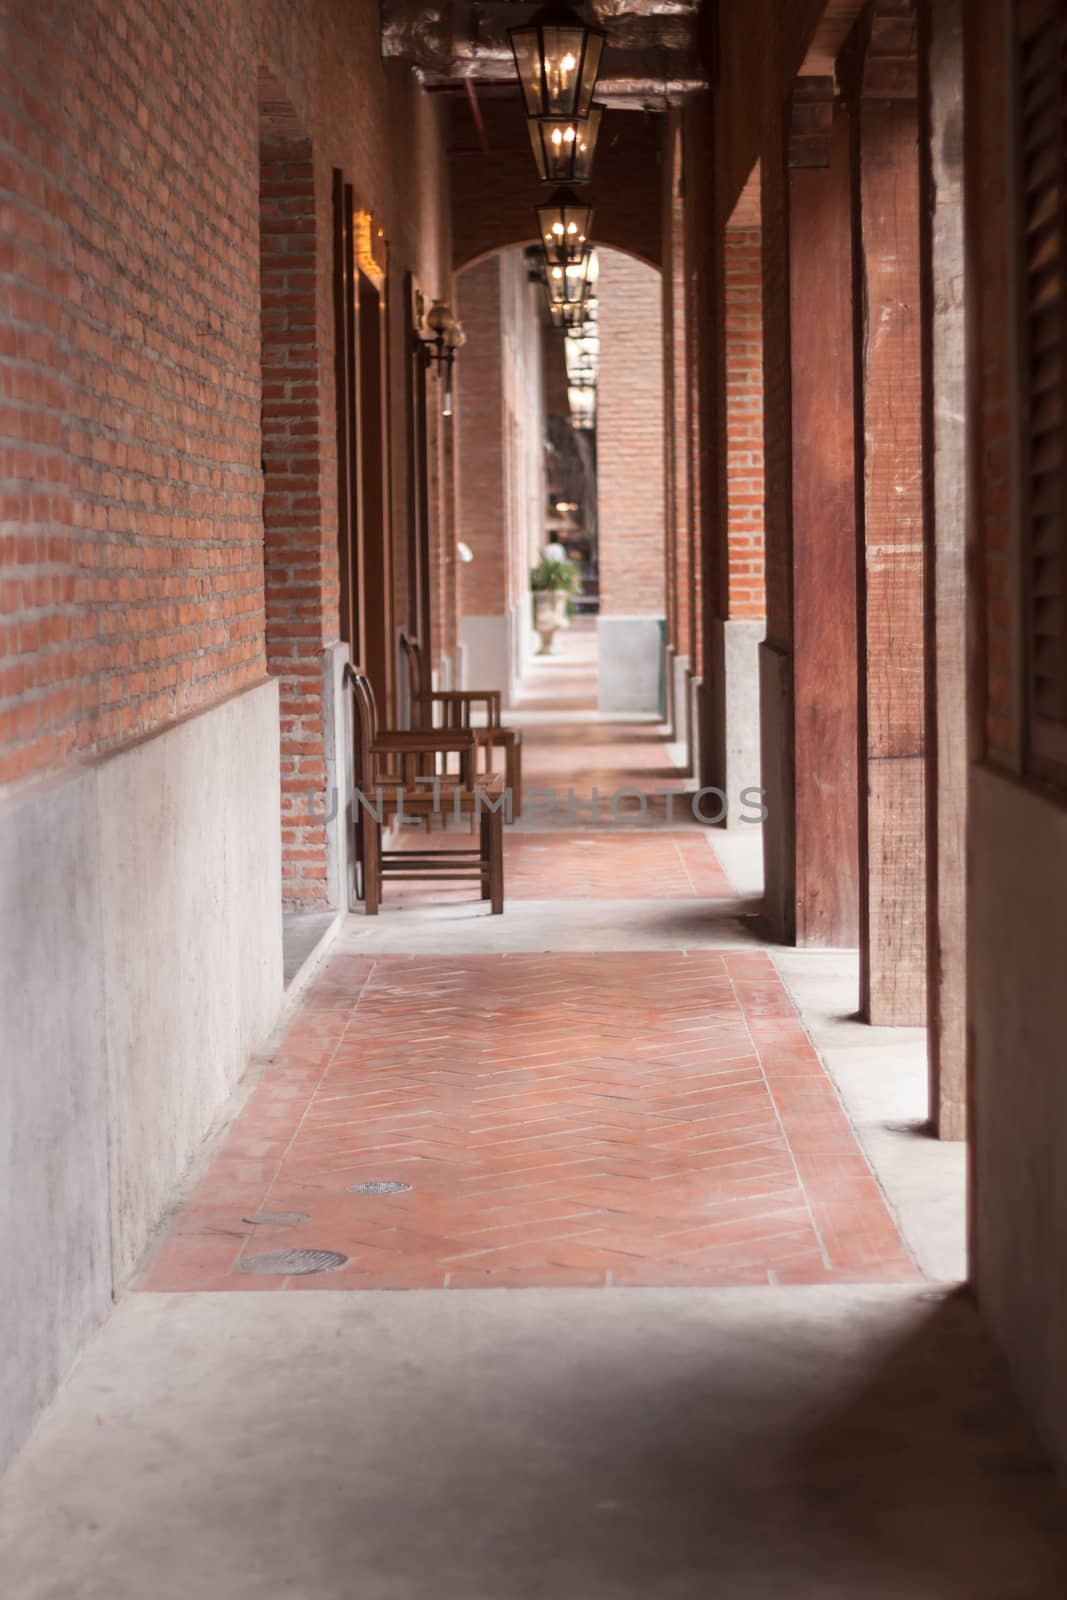 Walkway along the red brick wall by punsayaporn